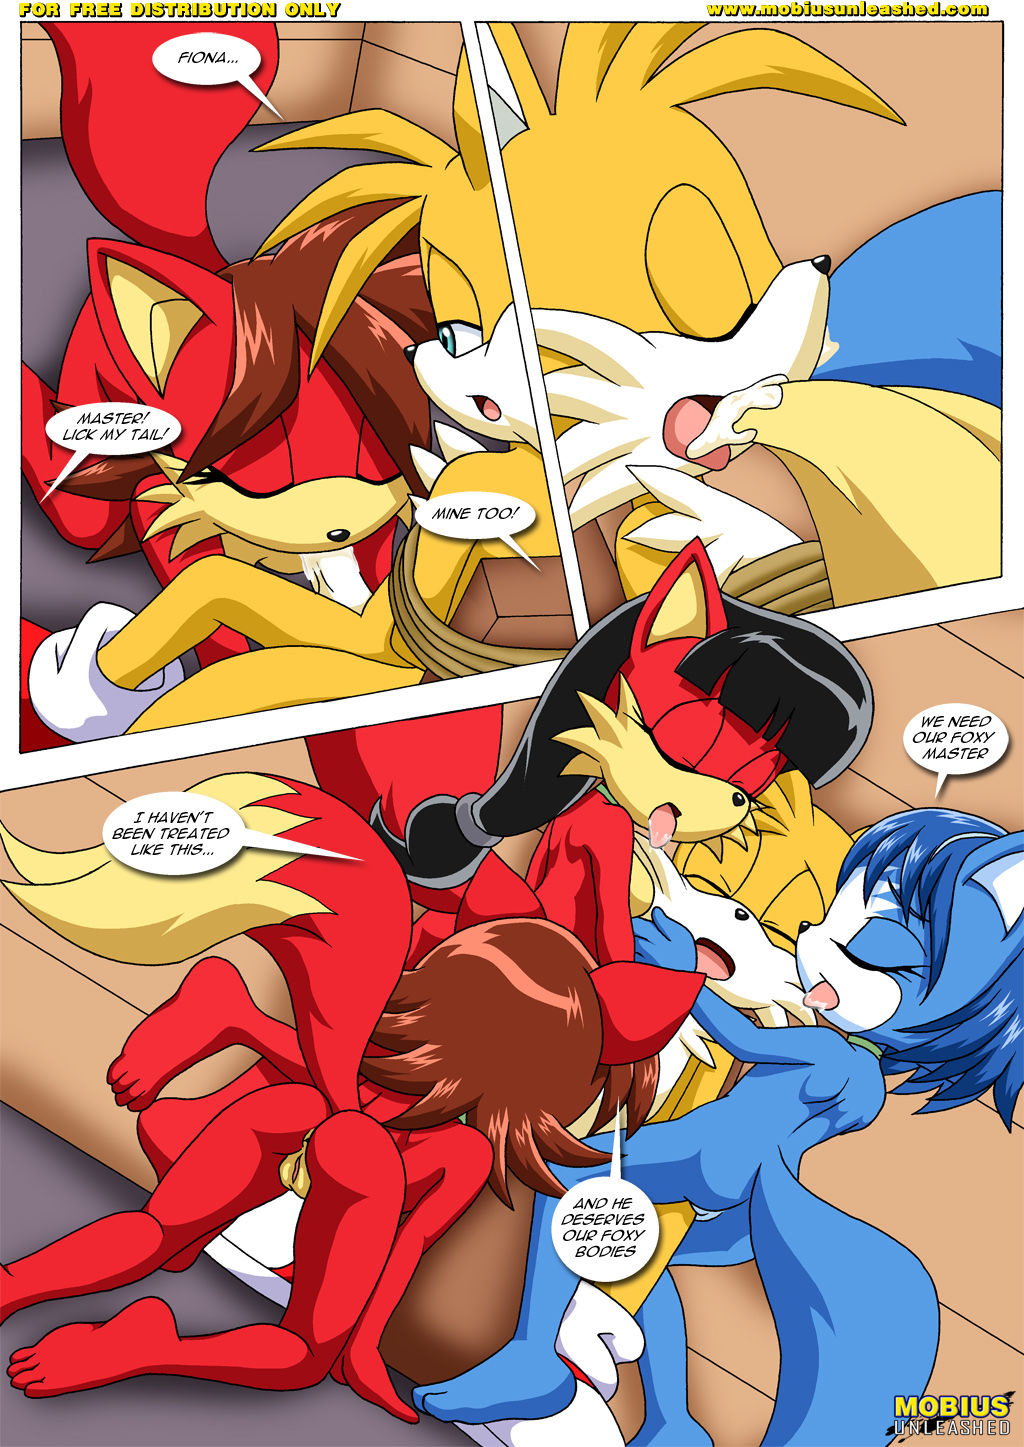 Palcomix FoXXXes (Sonic the Hedgehog, Star Fox) 23 / 39.